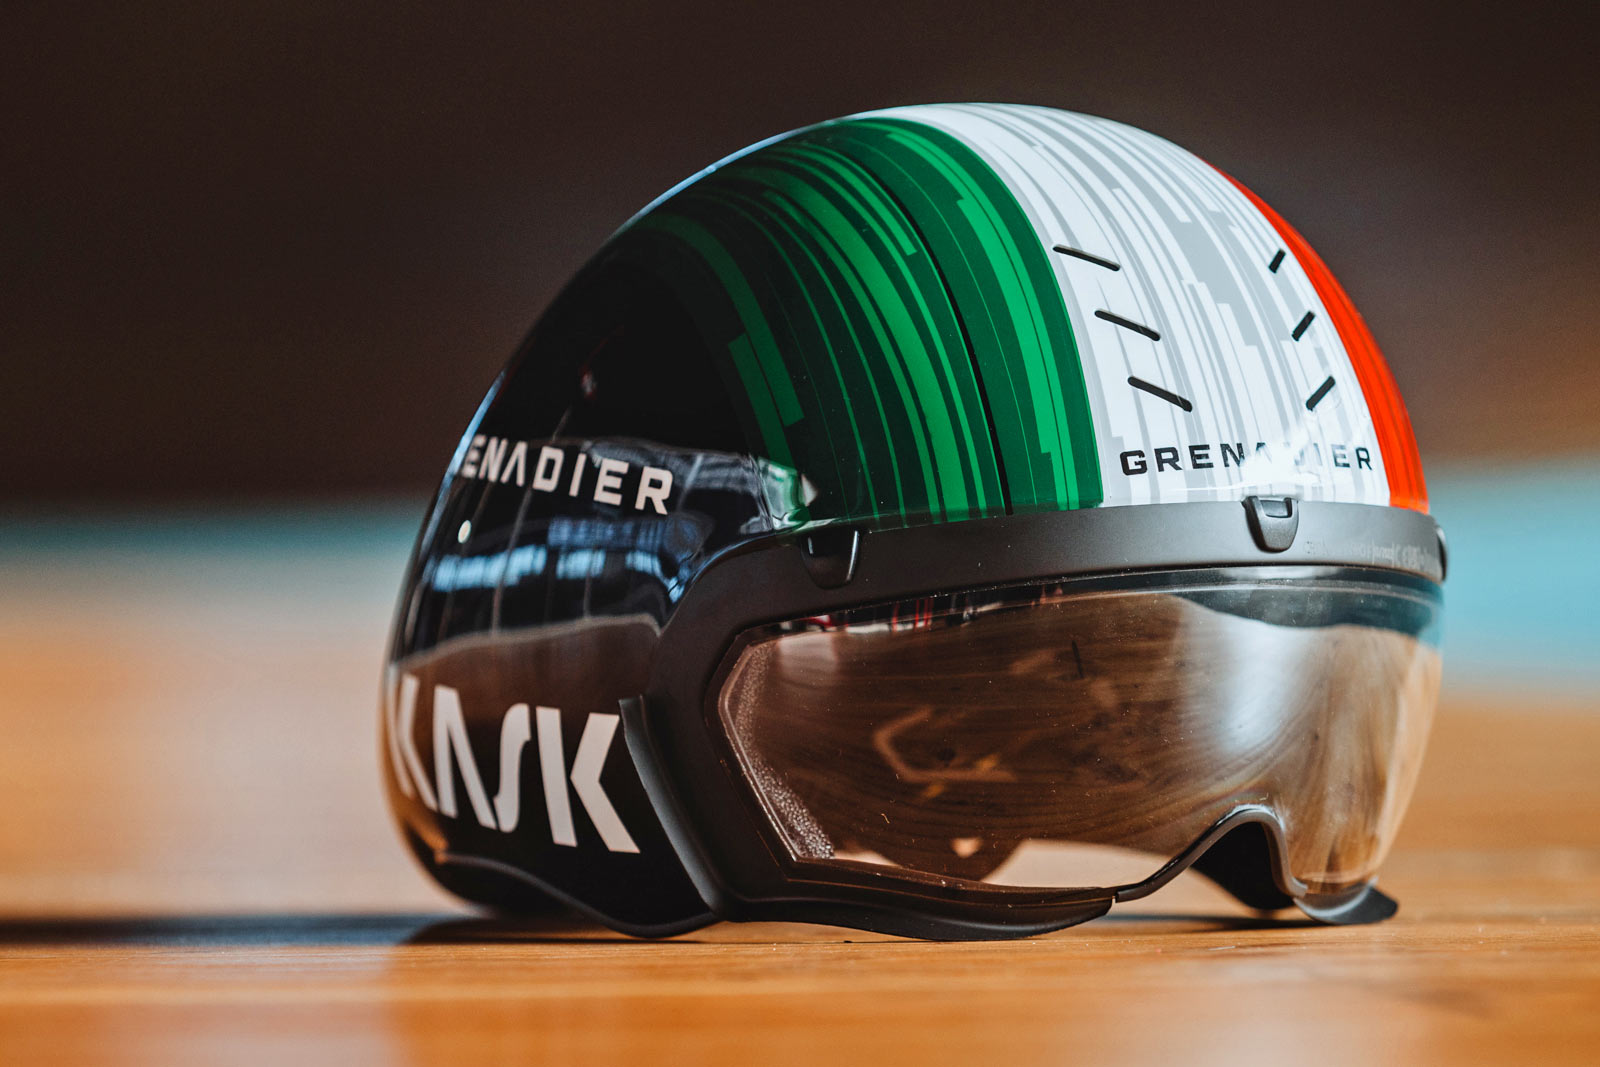 Kask-Bambino-Pro-Evo-aerodynamic-TT-helmet_new-Aero-Pro-Visor_photo-by-Chris-Auld.jpg